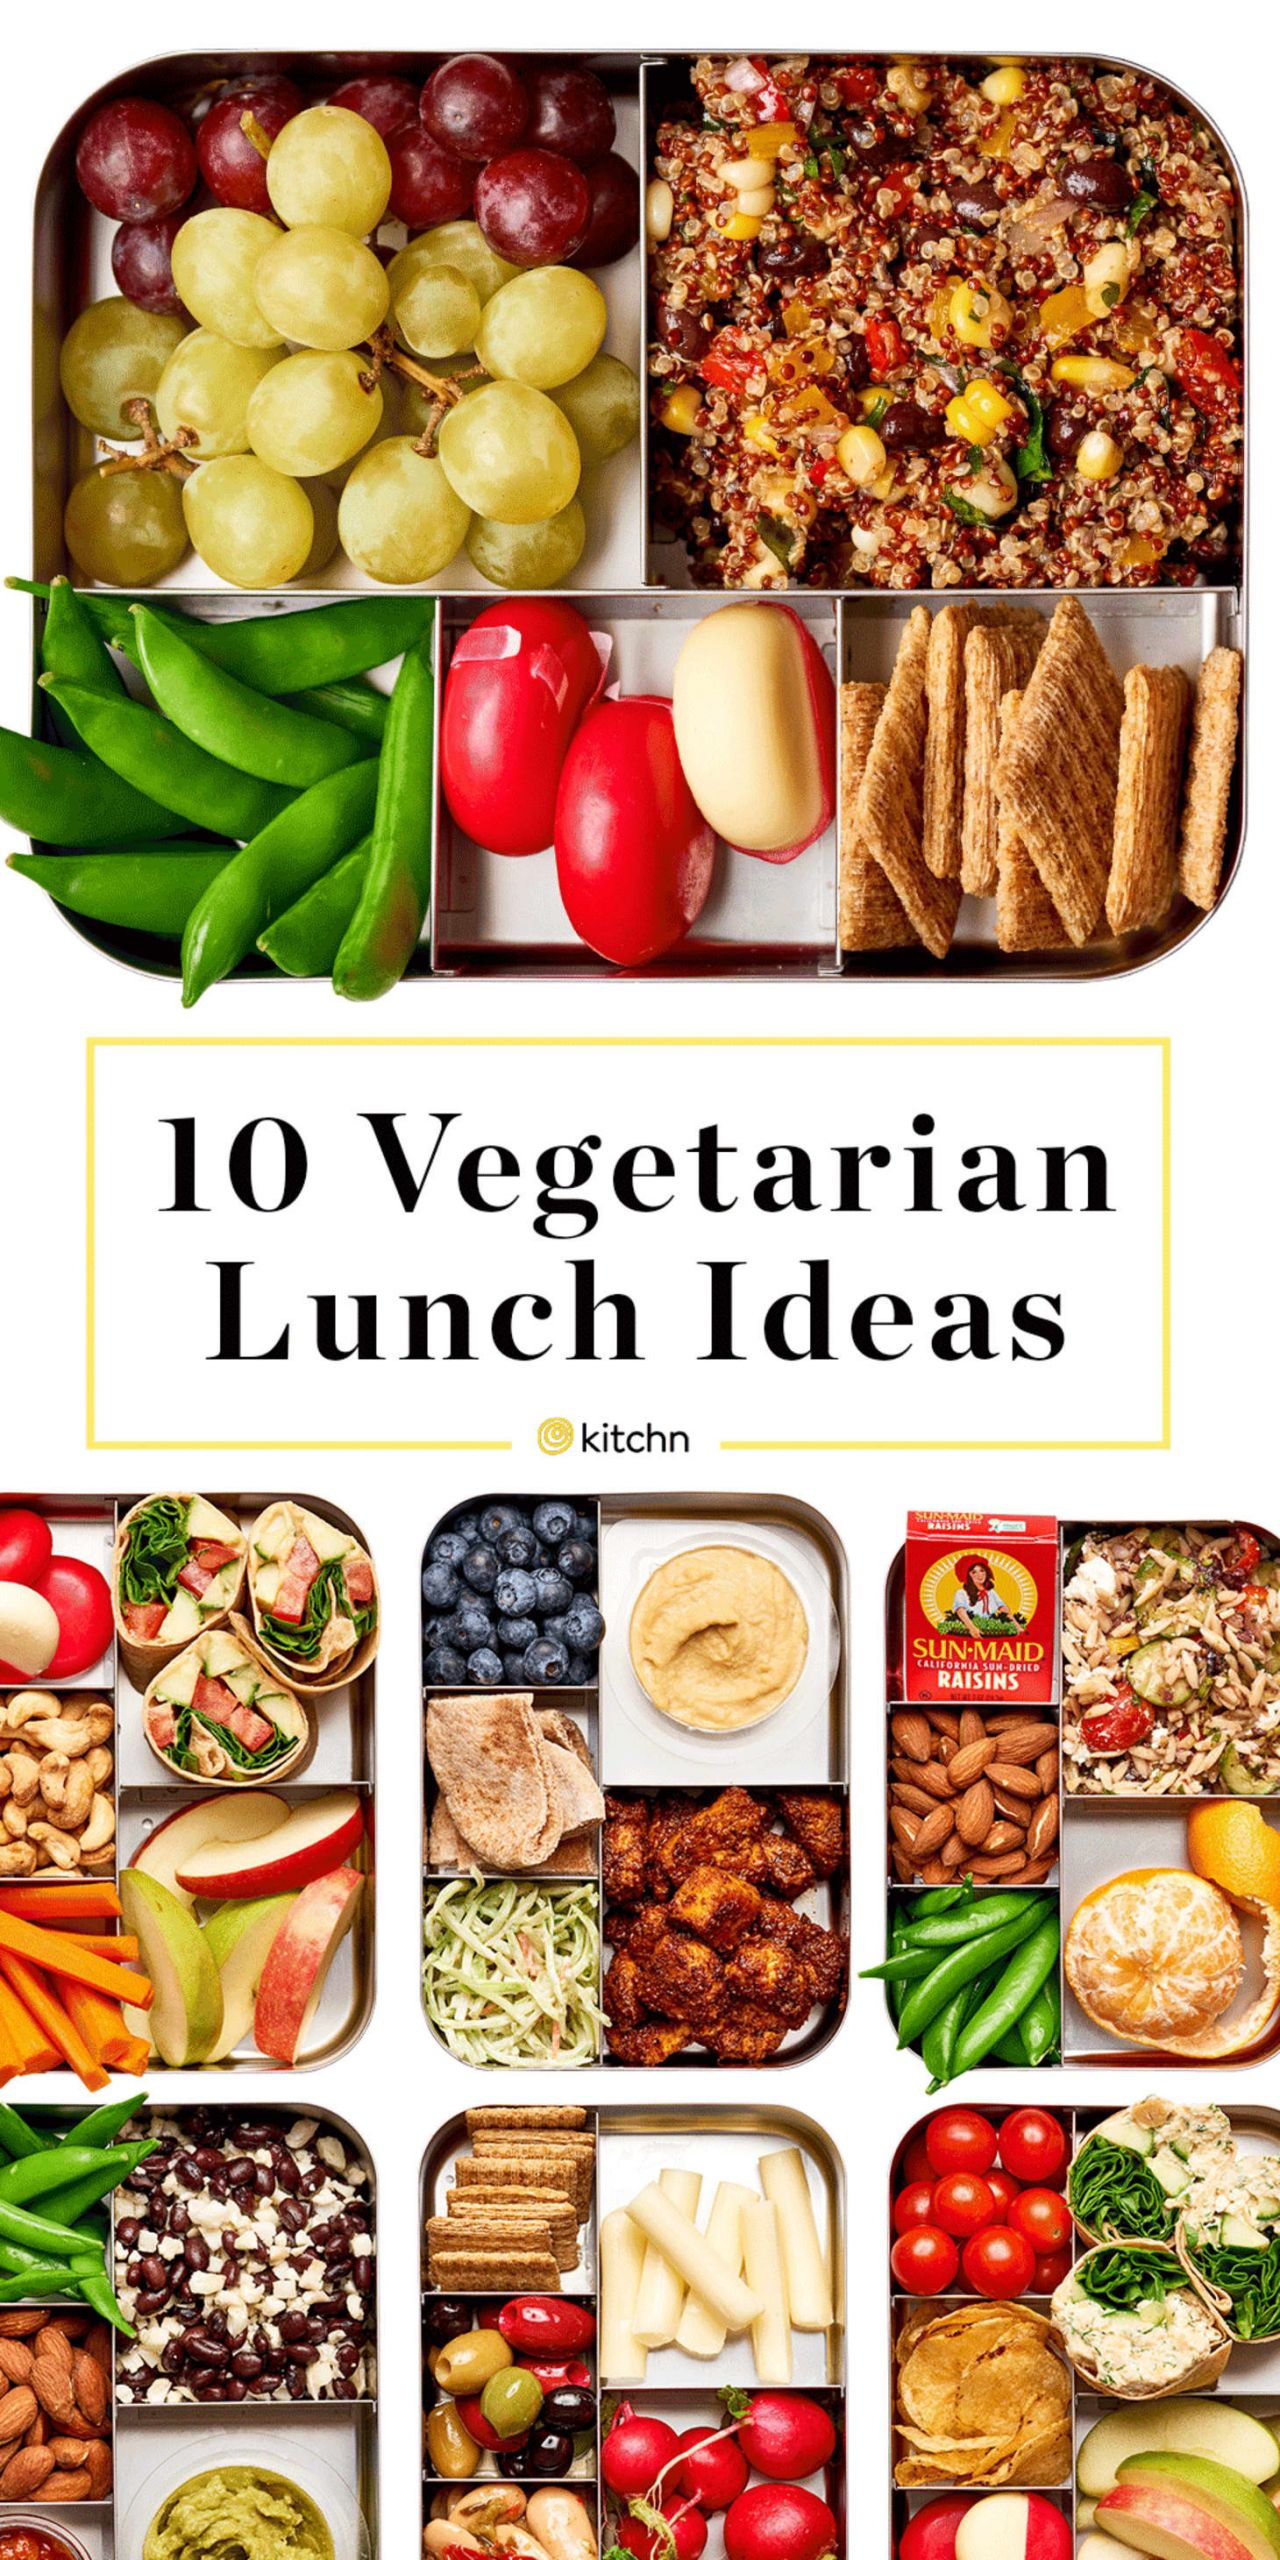 Easy Vegan Lunch Ideas
 Easy Ve arian Lunch Ideas